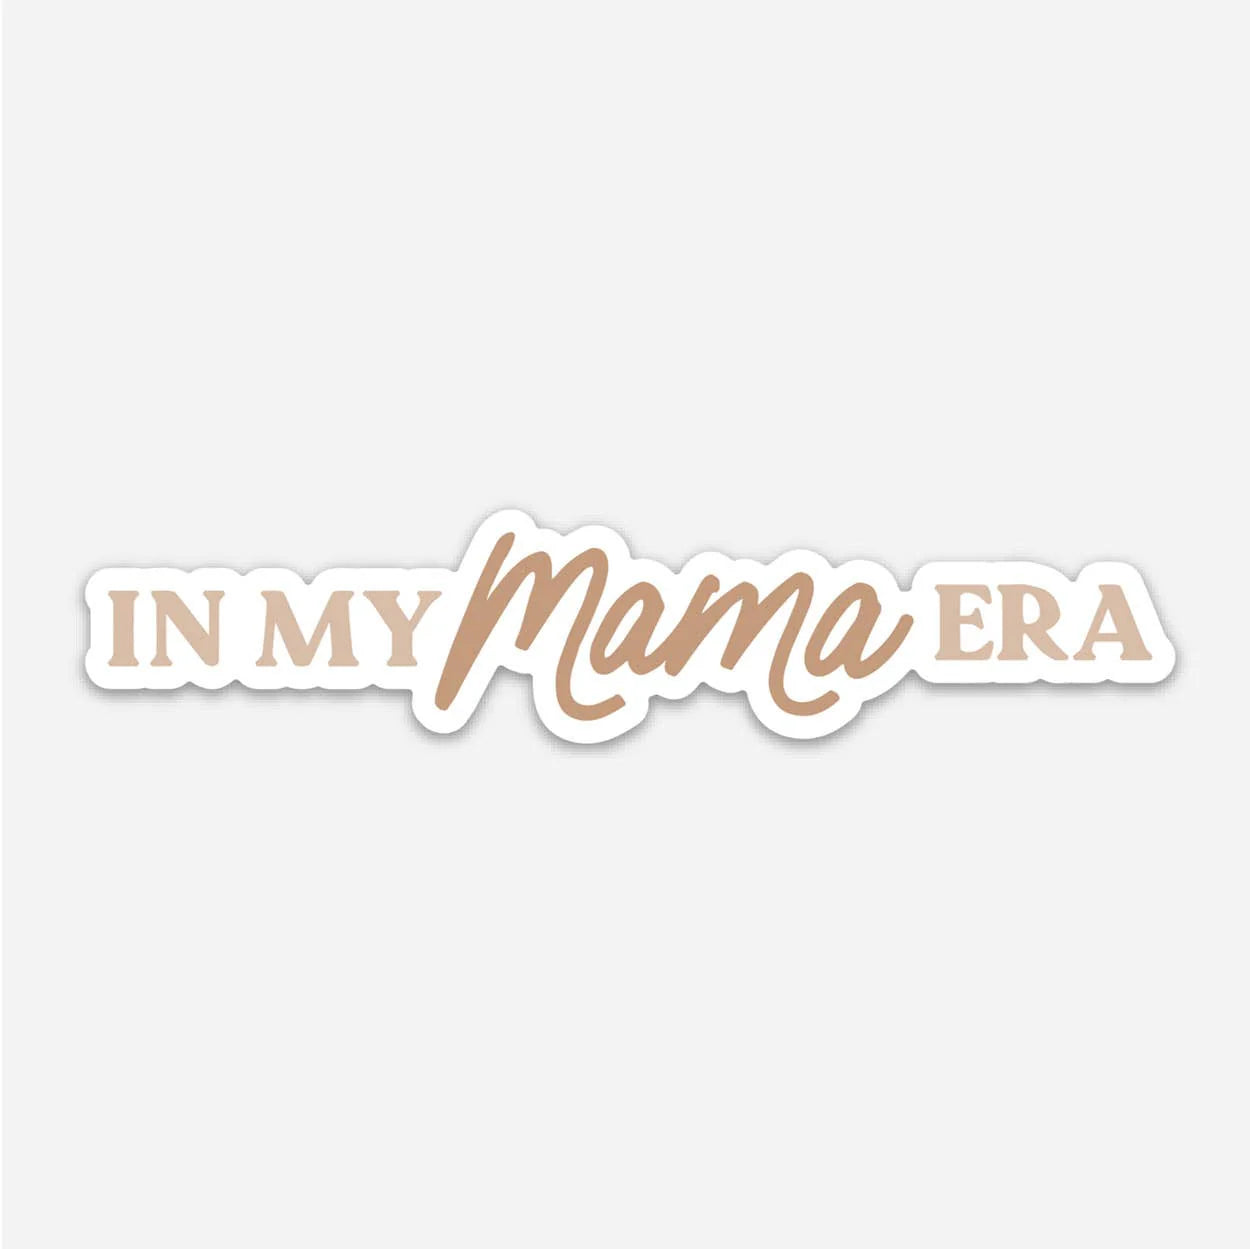 'In My Mama Era' Sticker